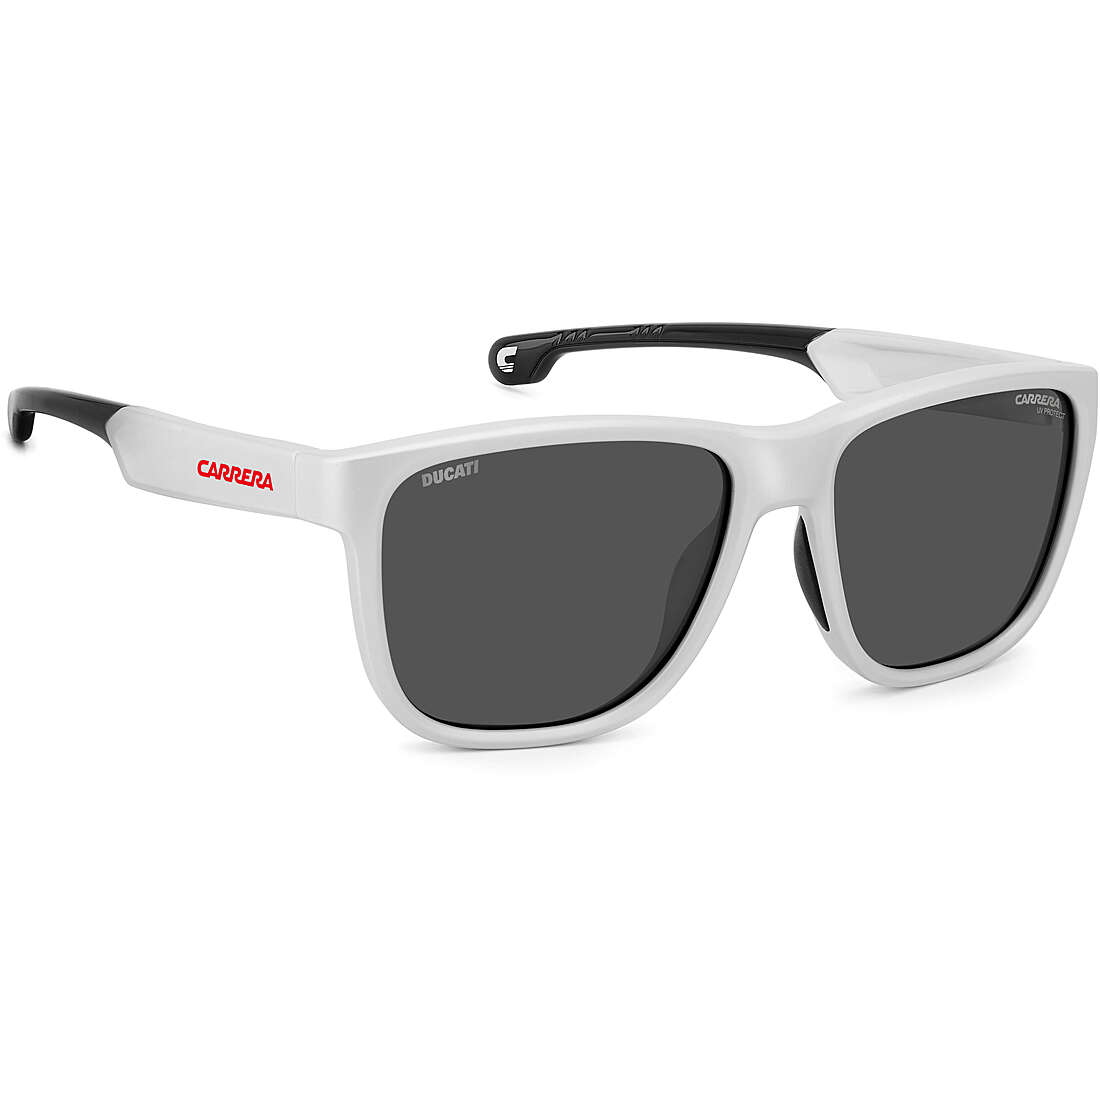 lunettes de soleil homme Carrera Carrera | Ducati 2049366HT57IR